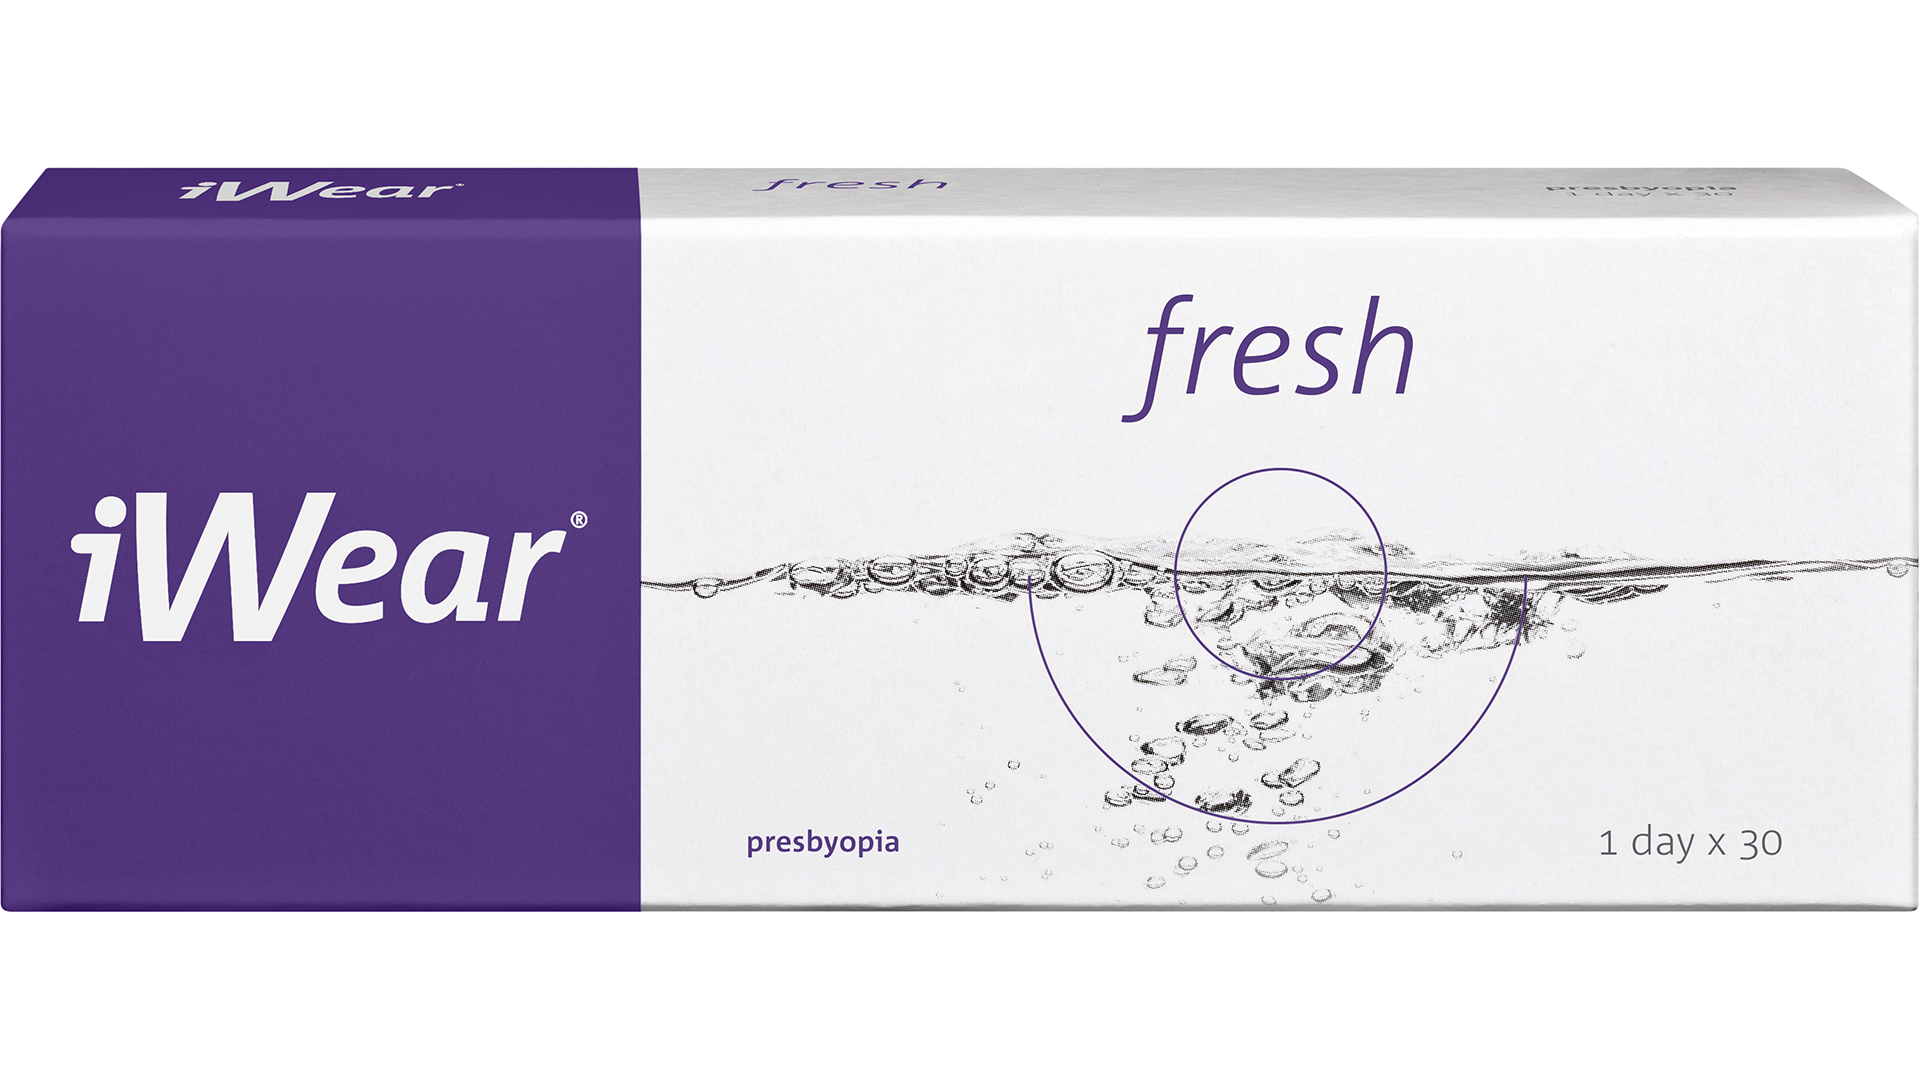 Front iWear fresh Presbyopia